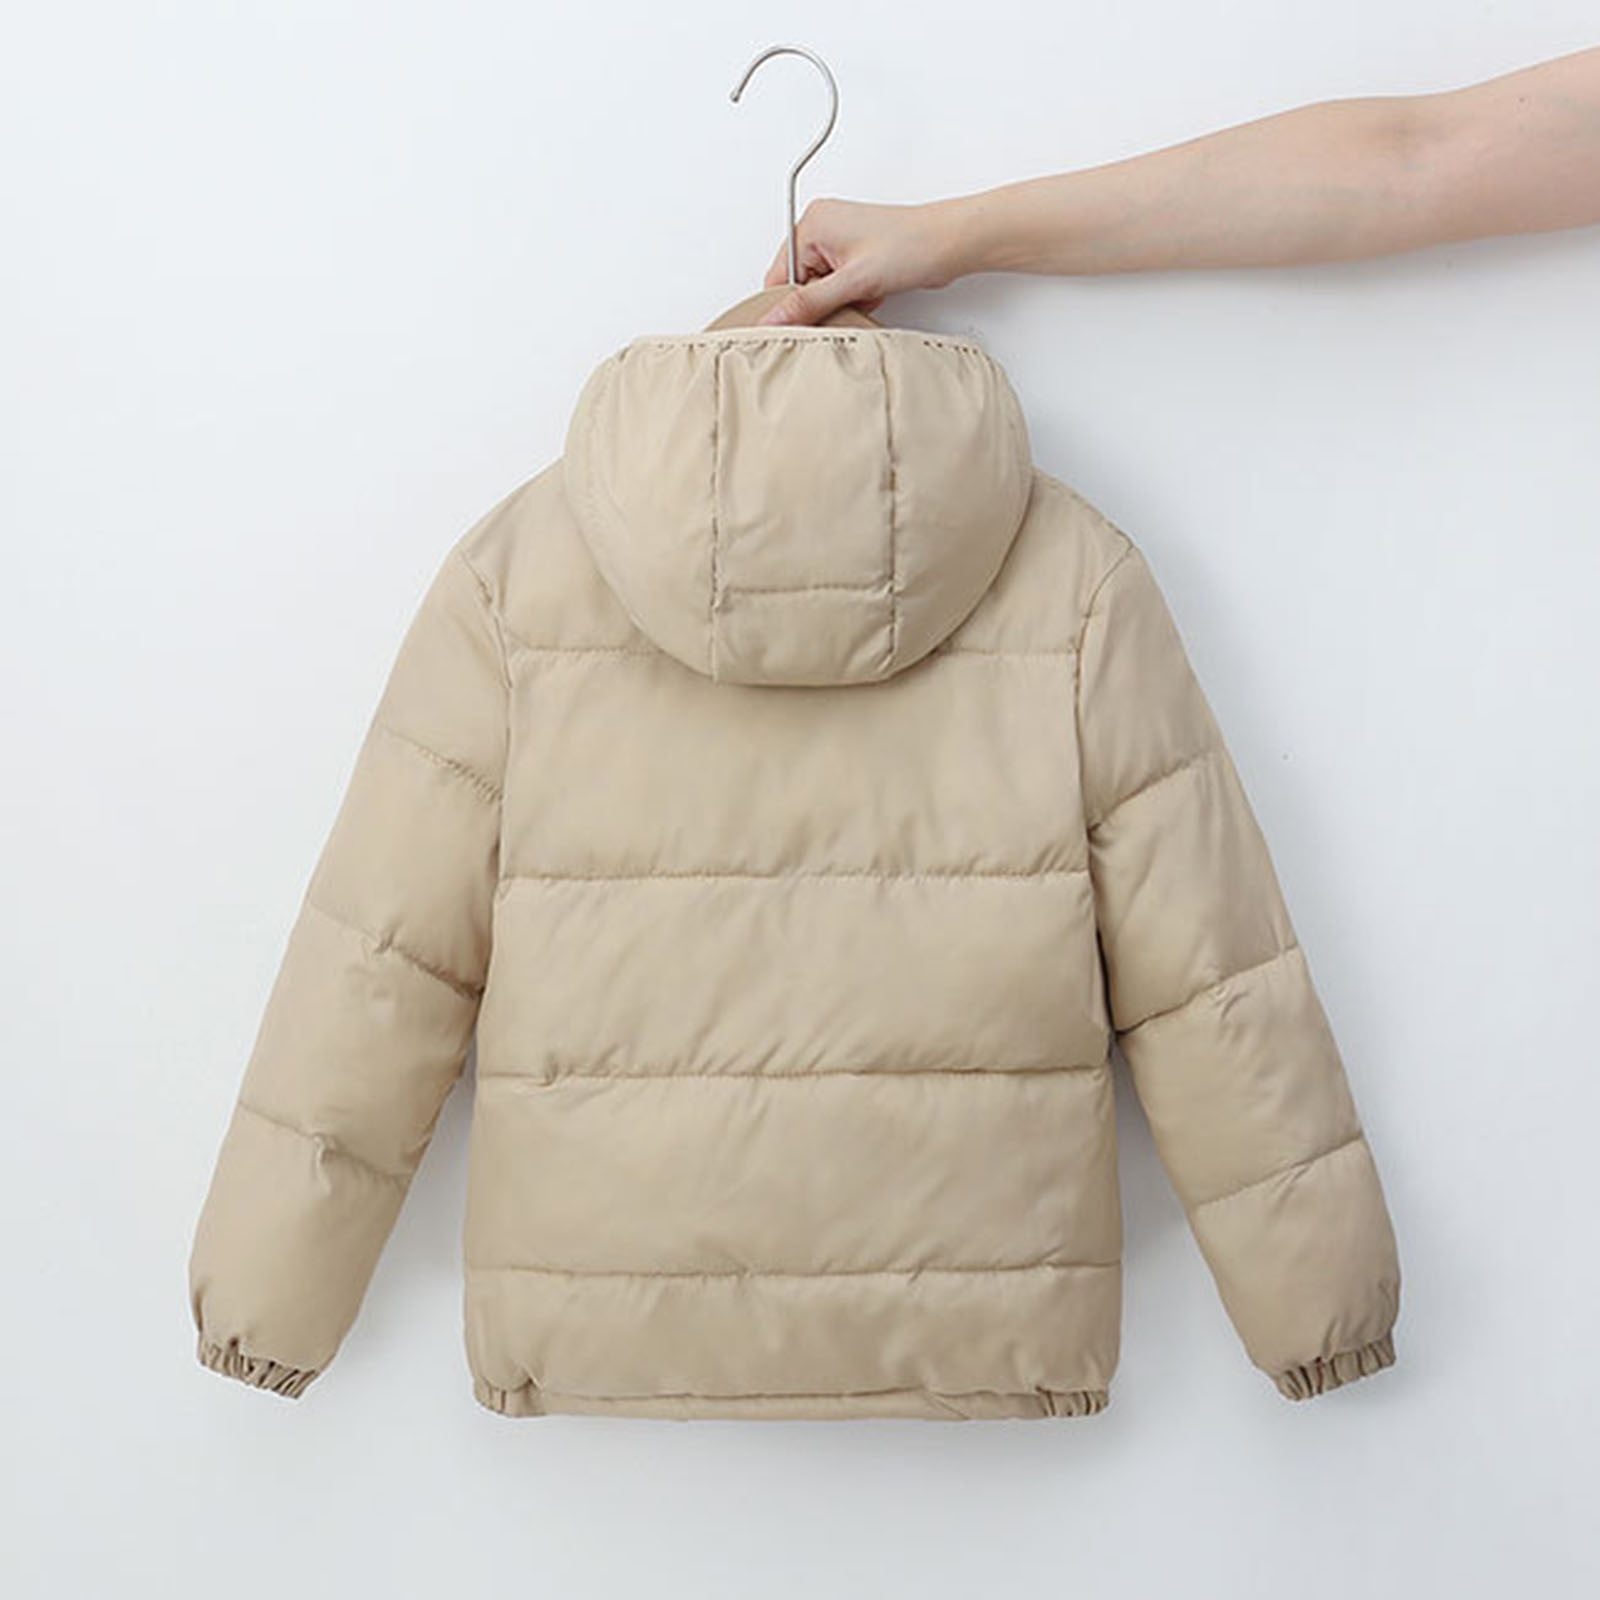 Aayomet Coat For Baby Boy Coat Children Coat Fashion Hooded Kids Jacket ...